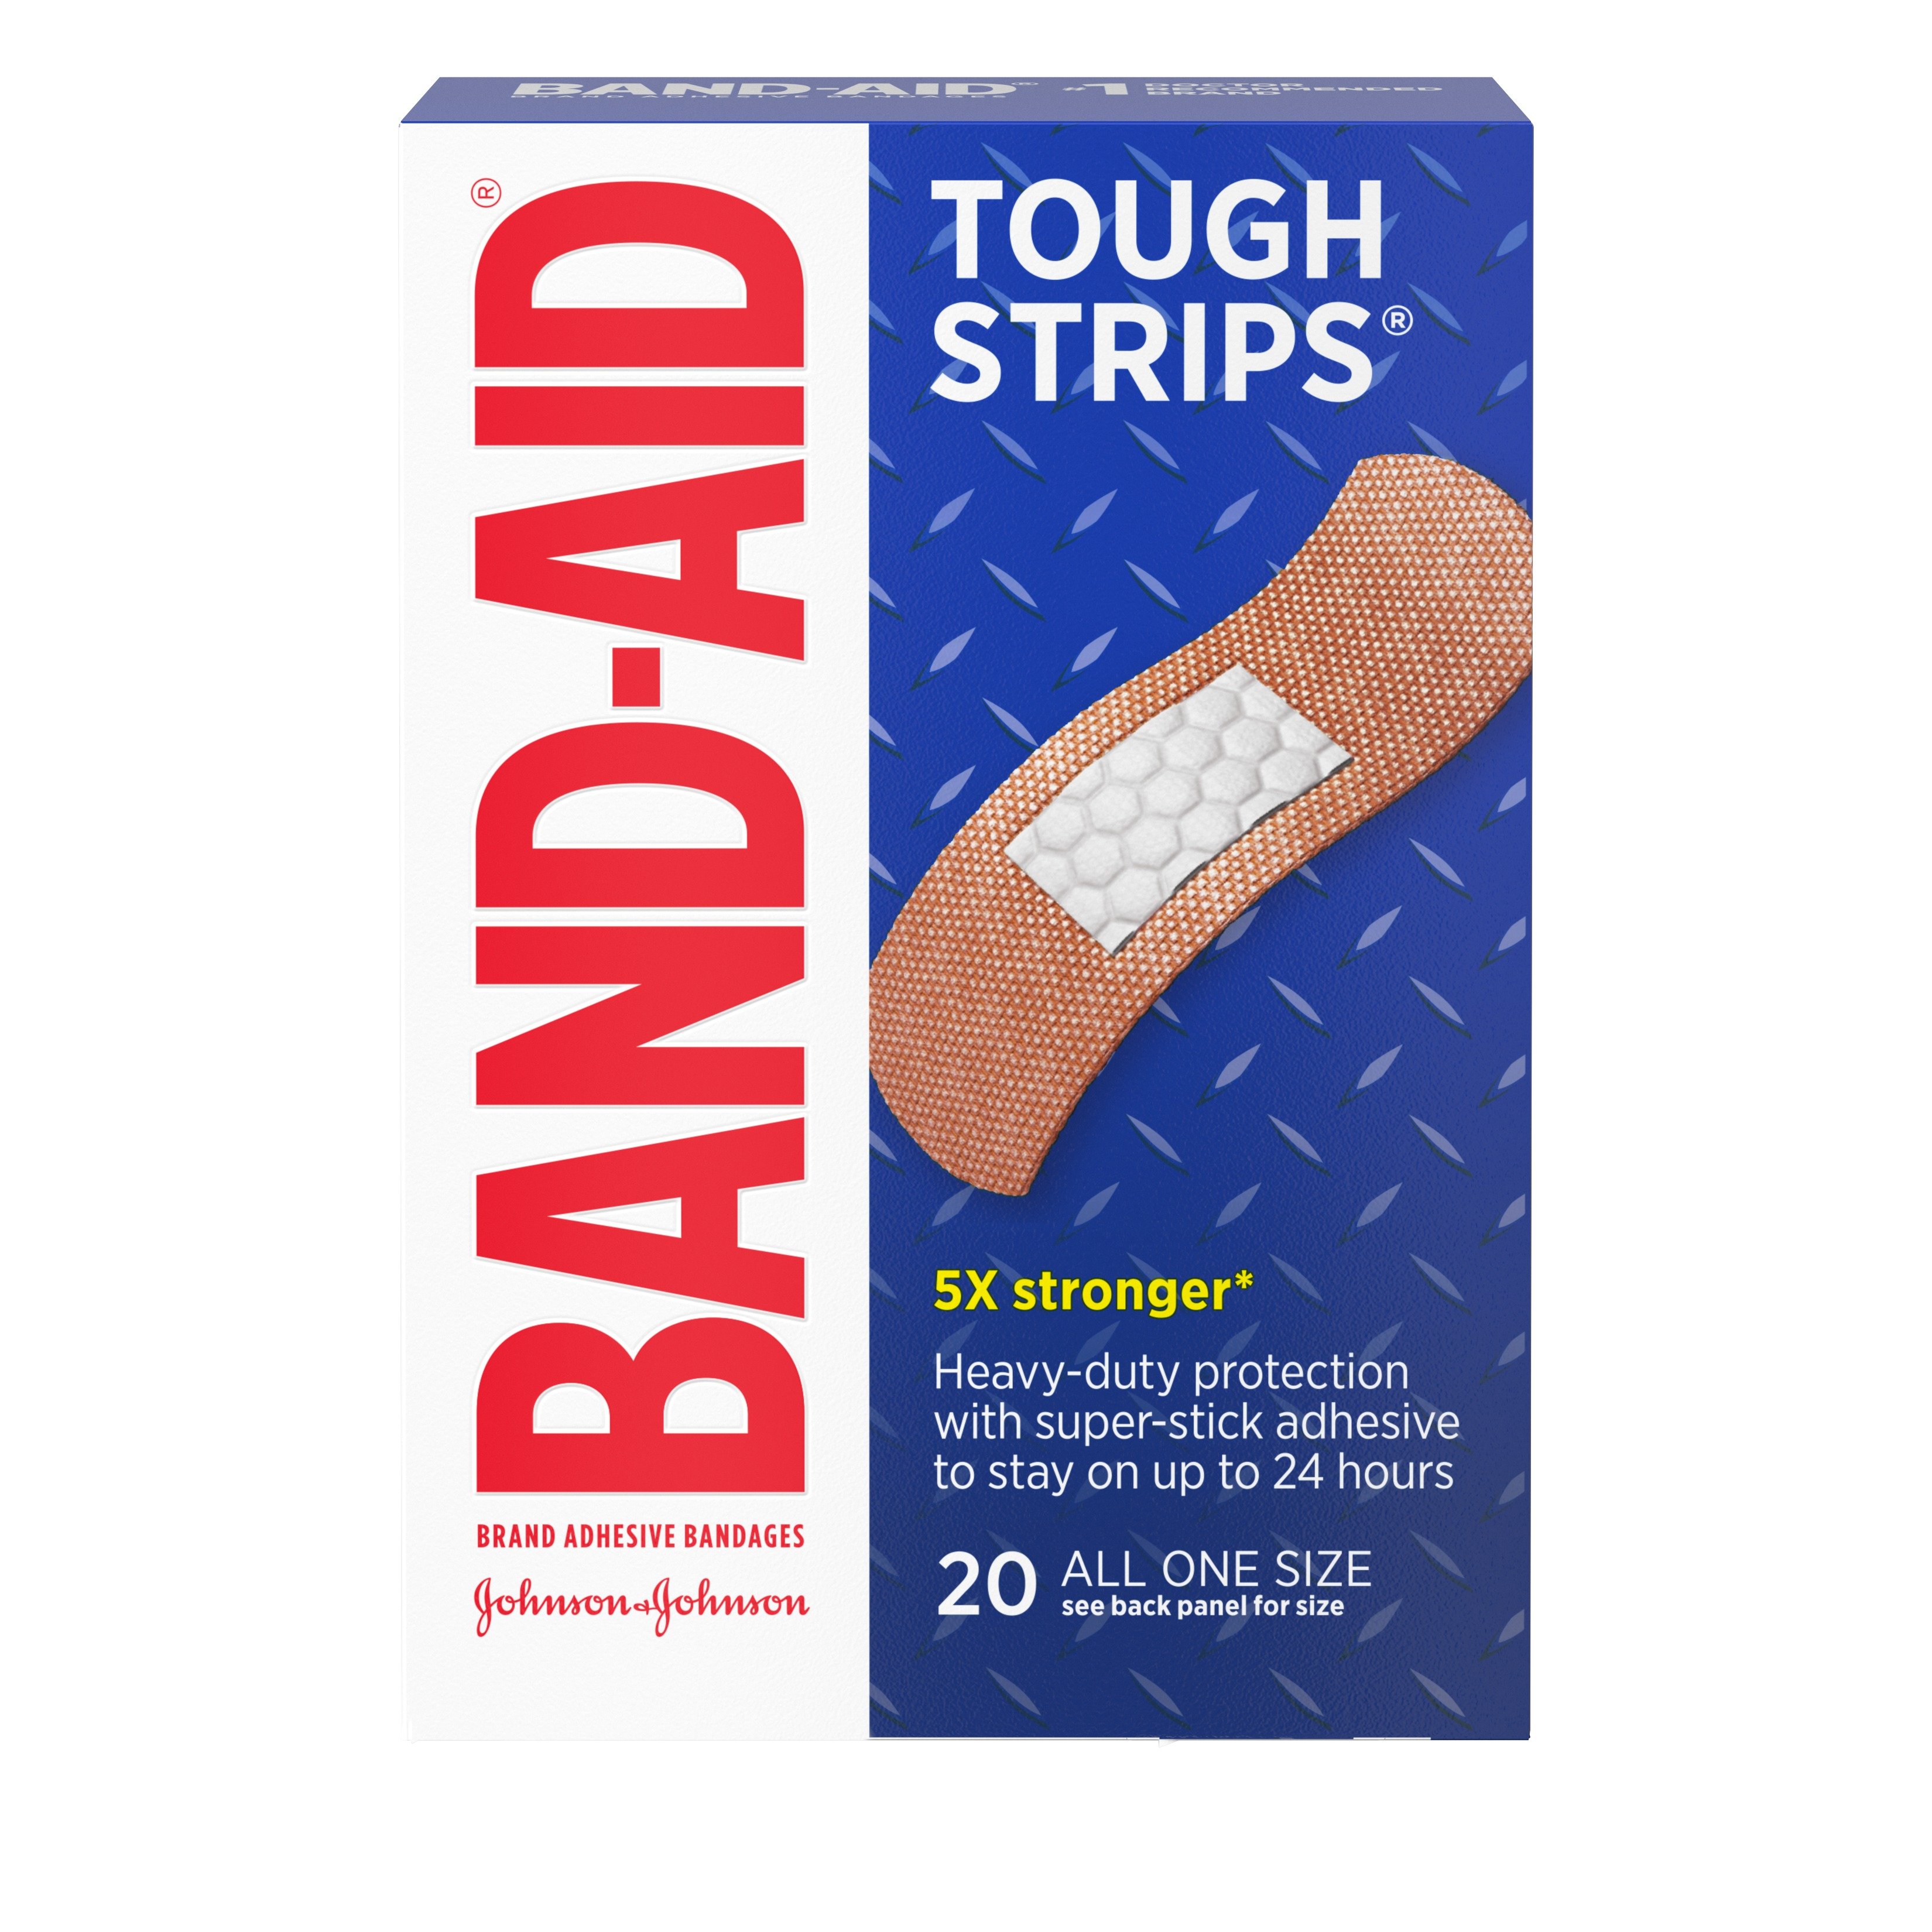 TRU-STAY™ SHEER STRIPS COMFORT-FLEX® Bandages, 60 count